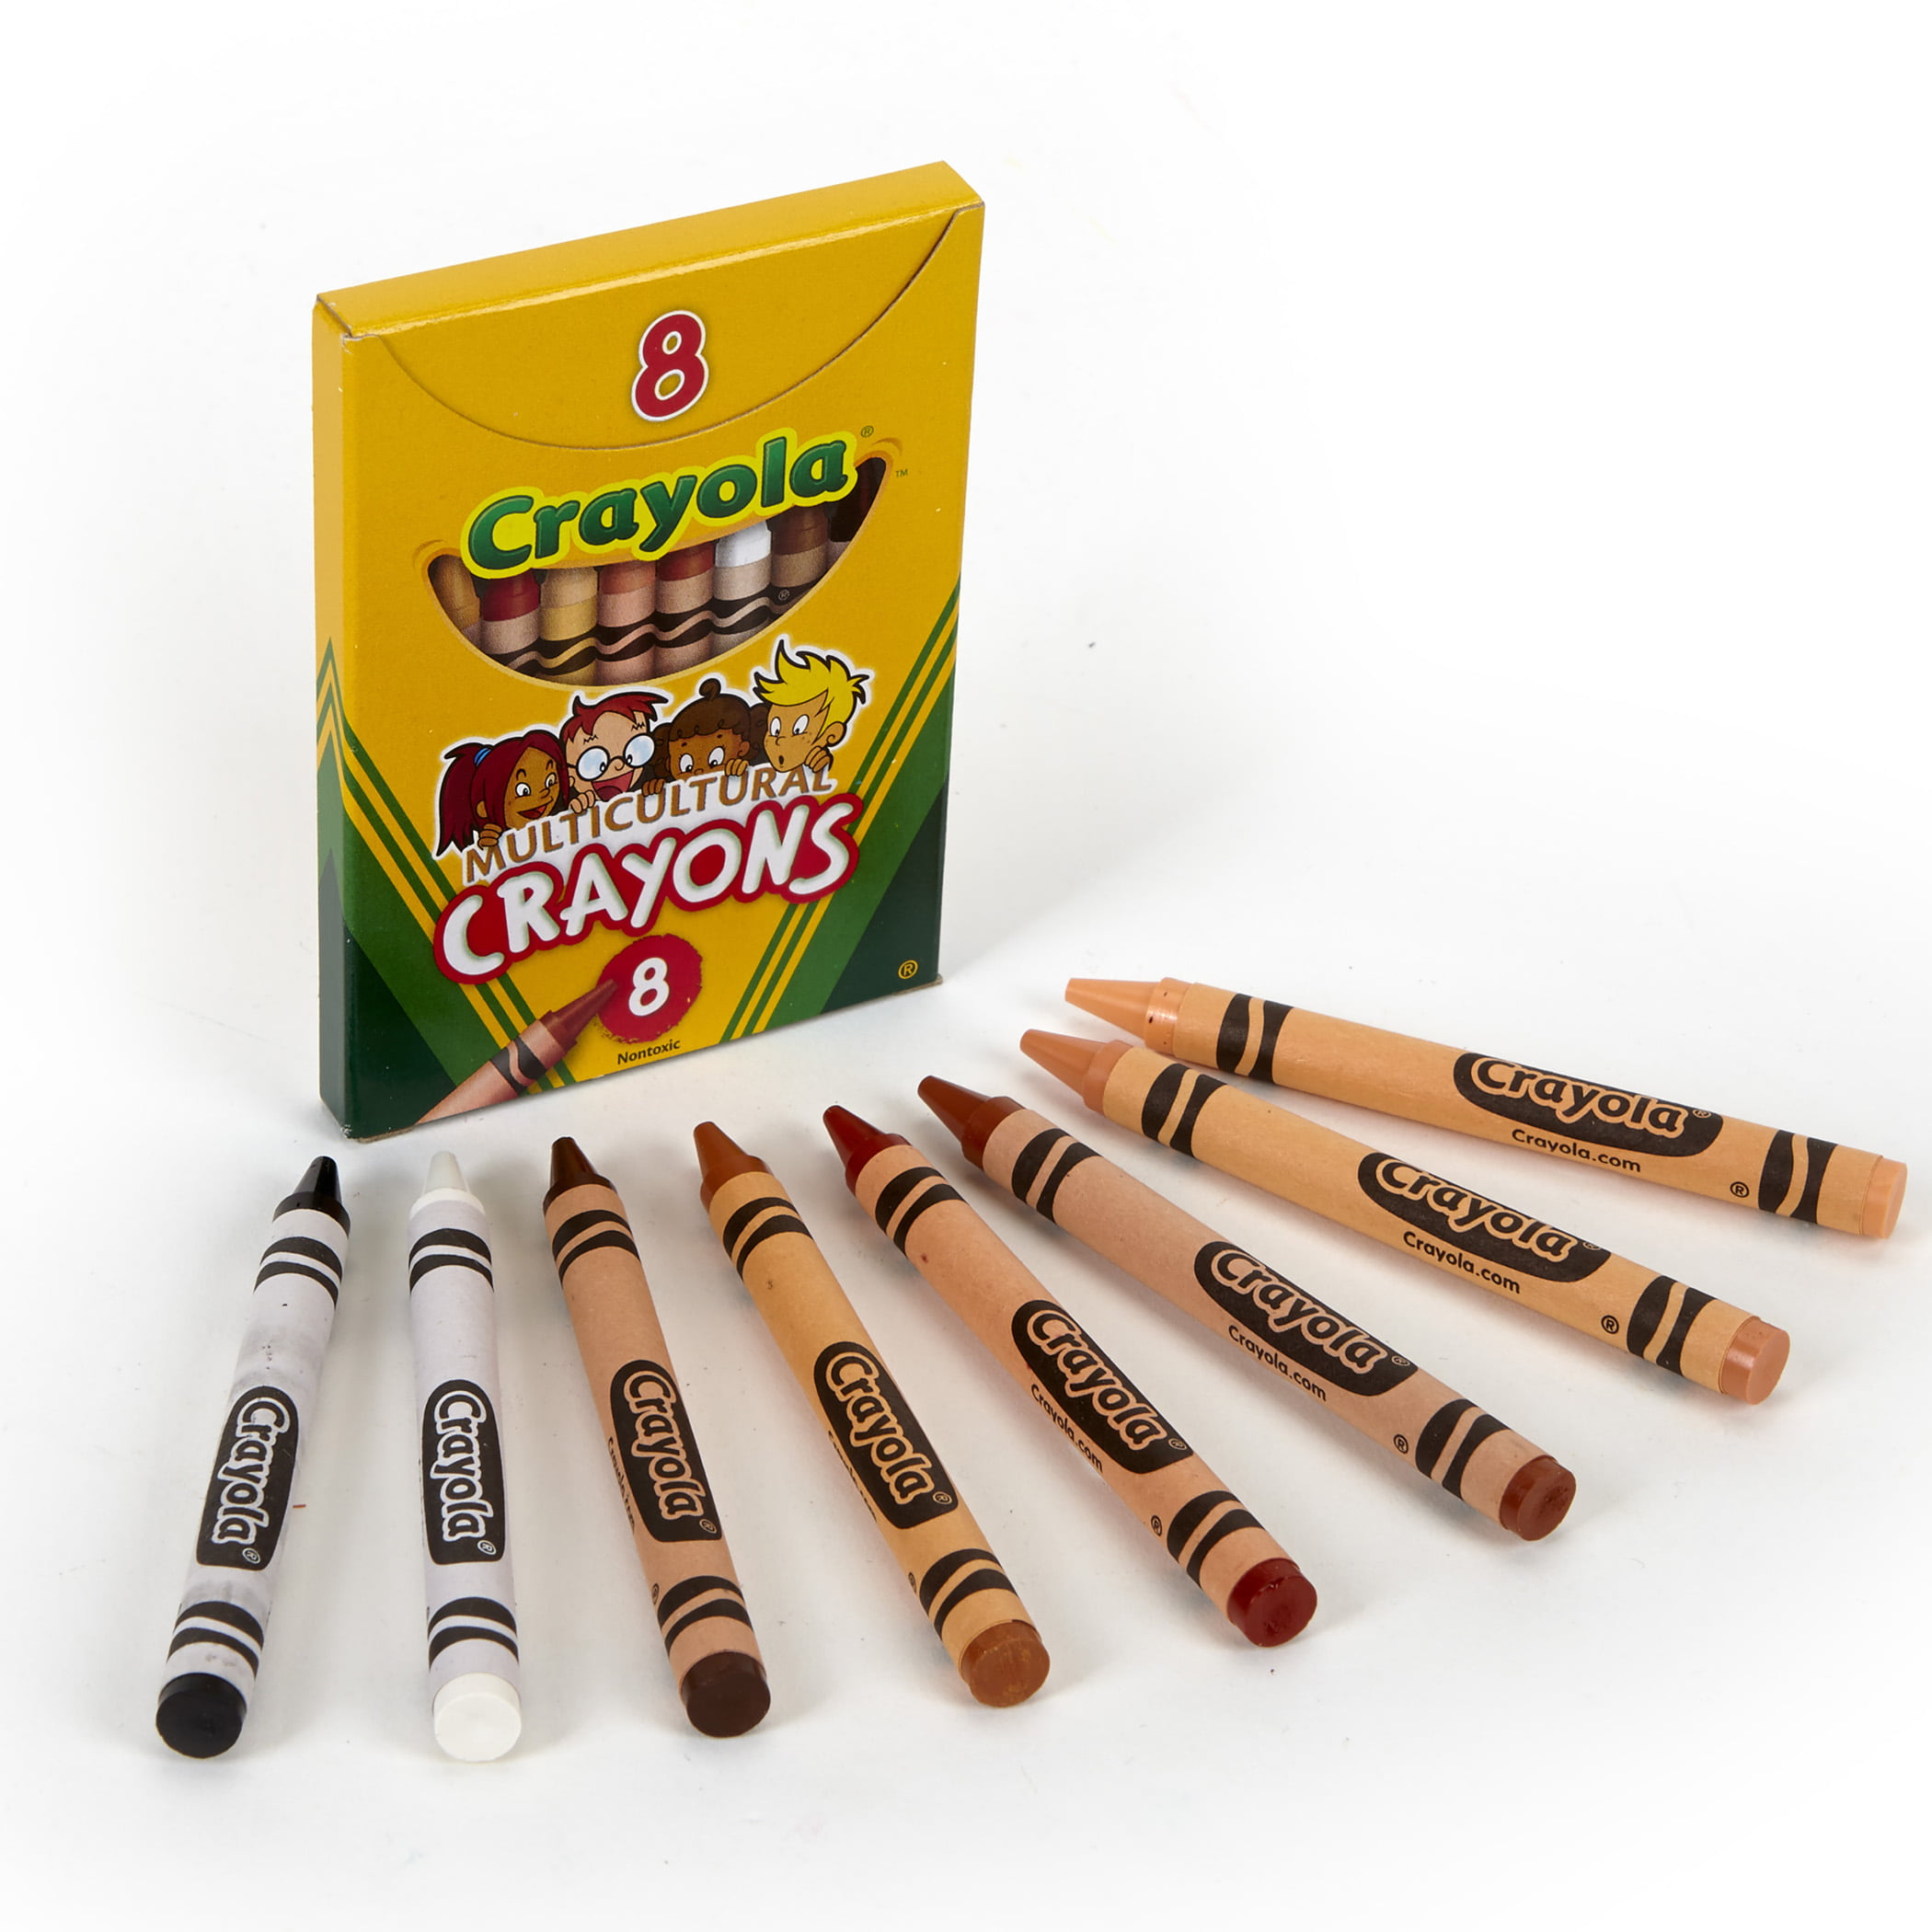 Crayola Multicultural Kit (Item #CRMULCUL)